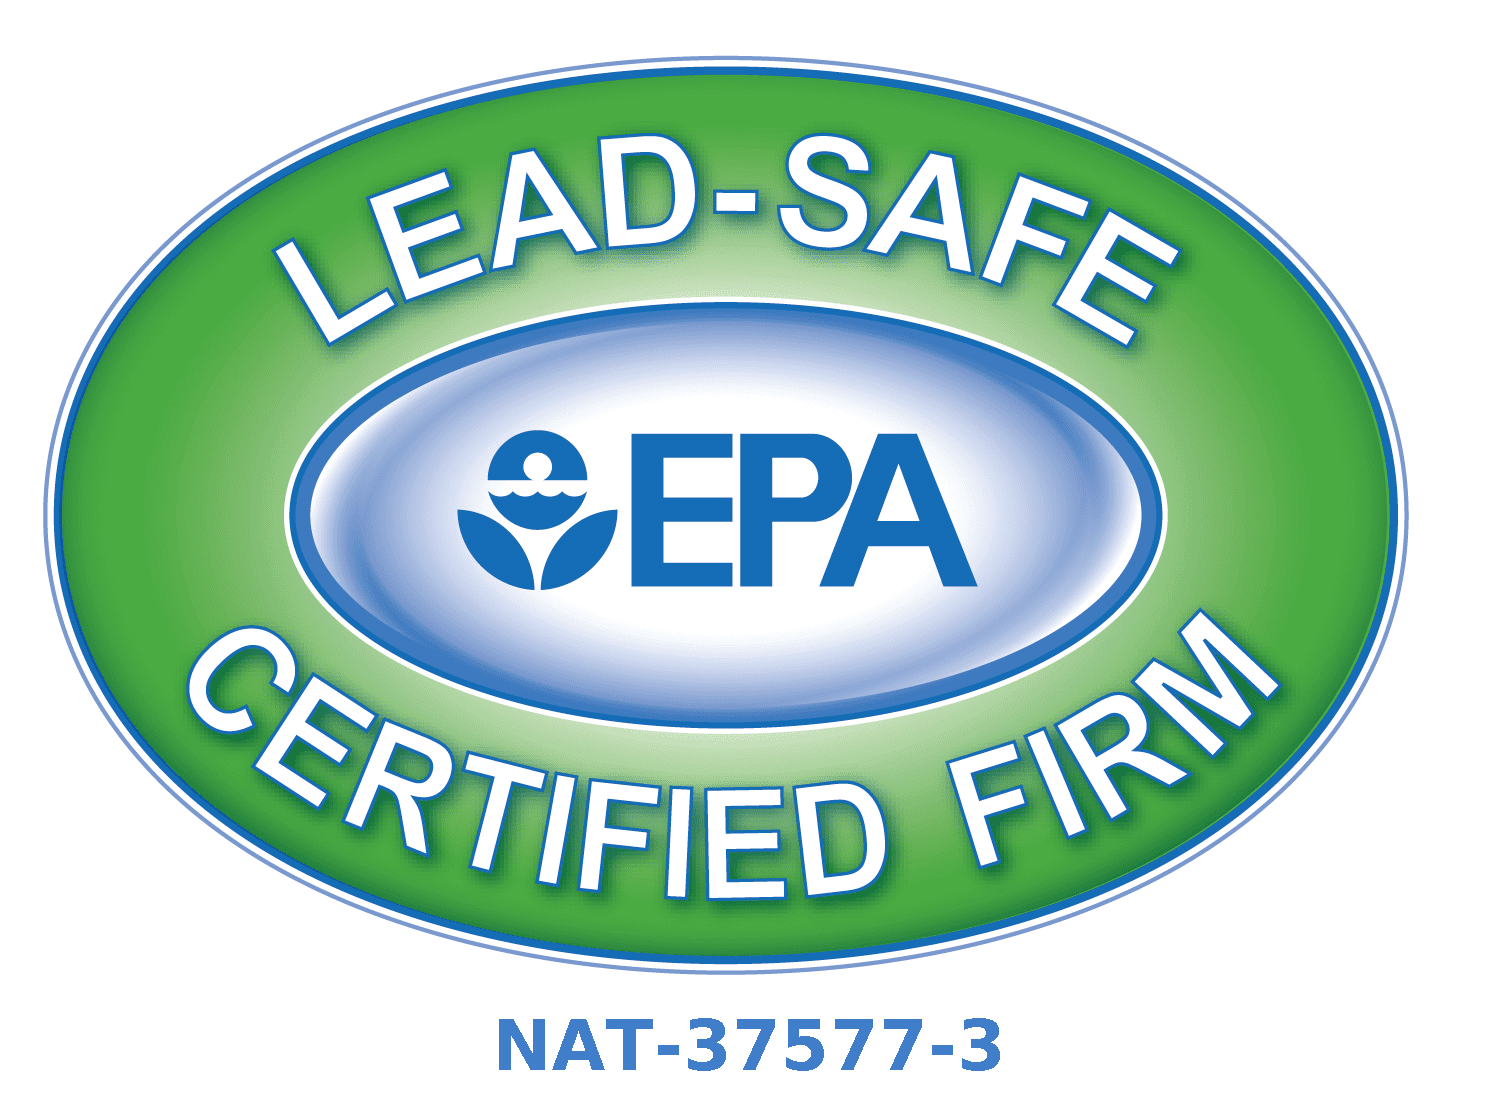 EPA Leadsafe